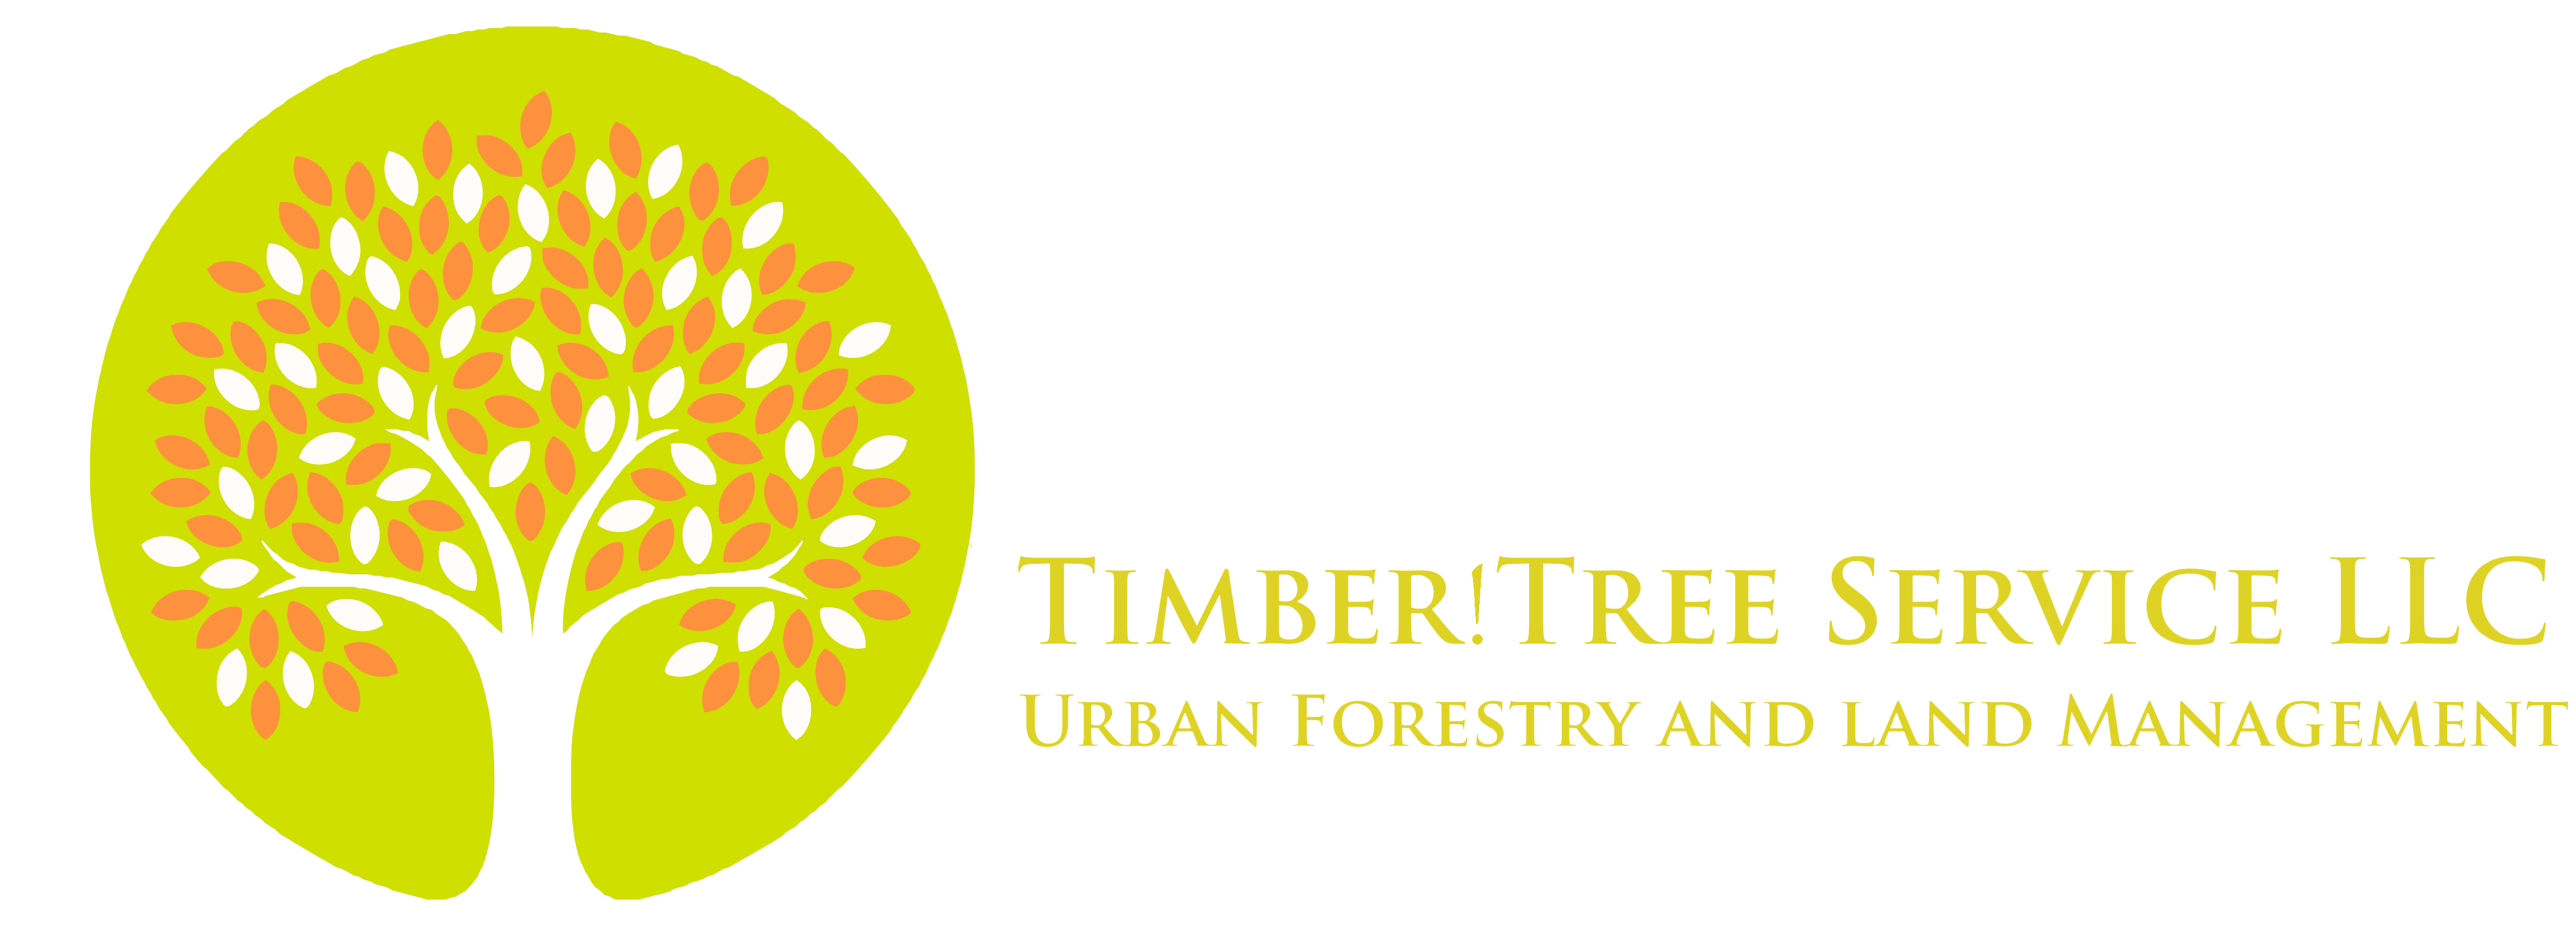 Timber Tree Service LOGO